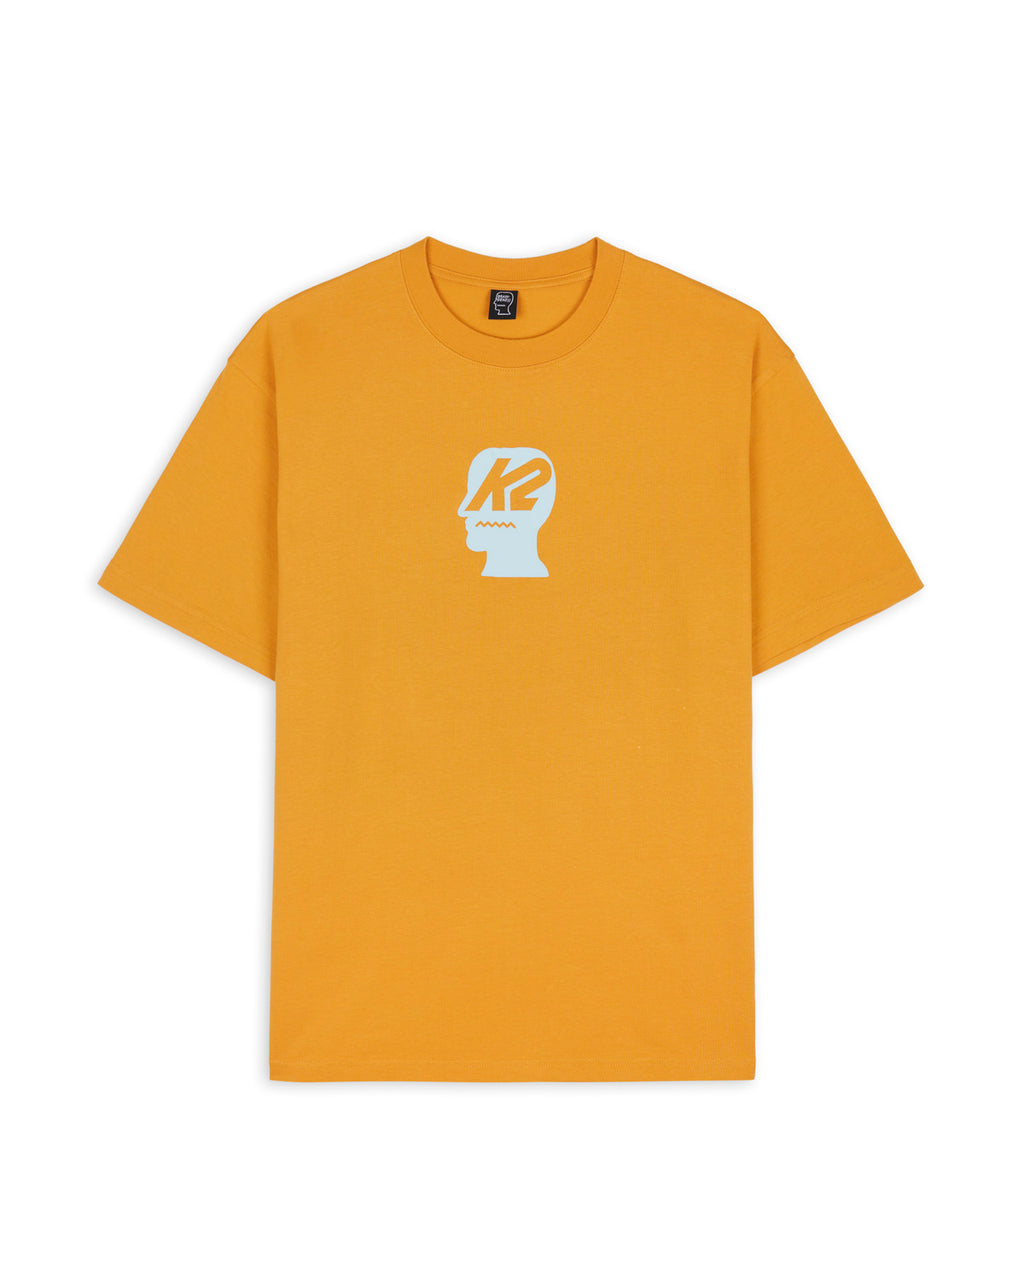 Brain Dead x K2 Logo Lockup T-Shirt - Orange